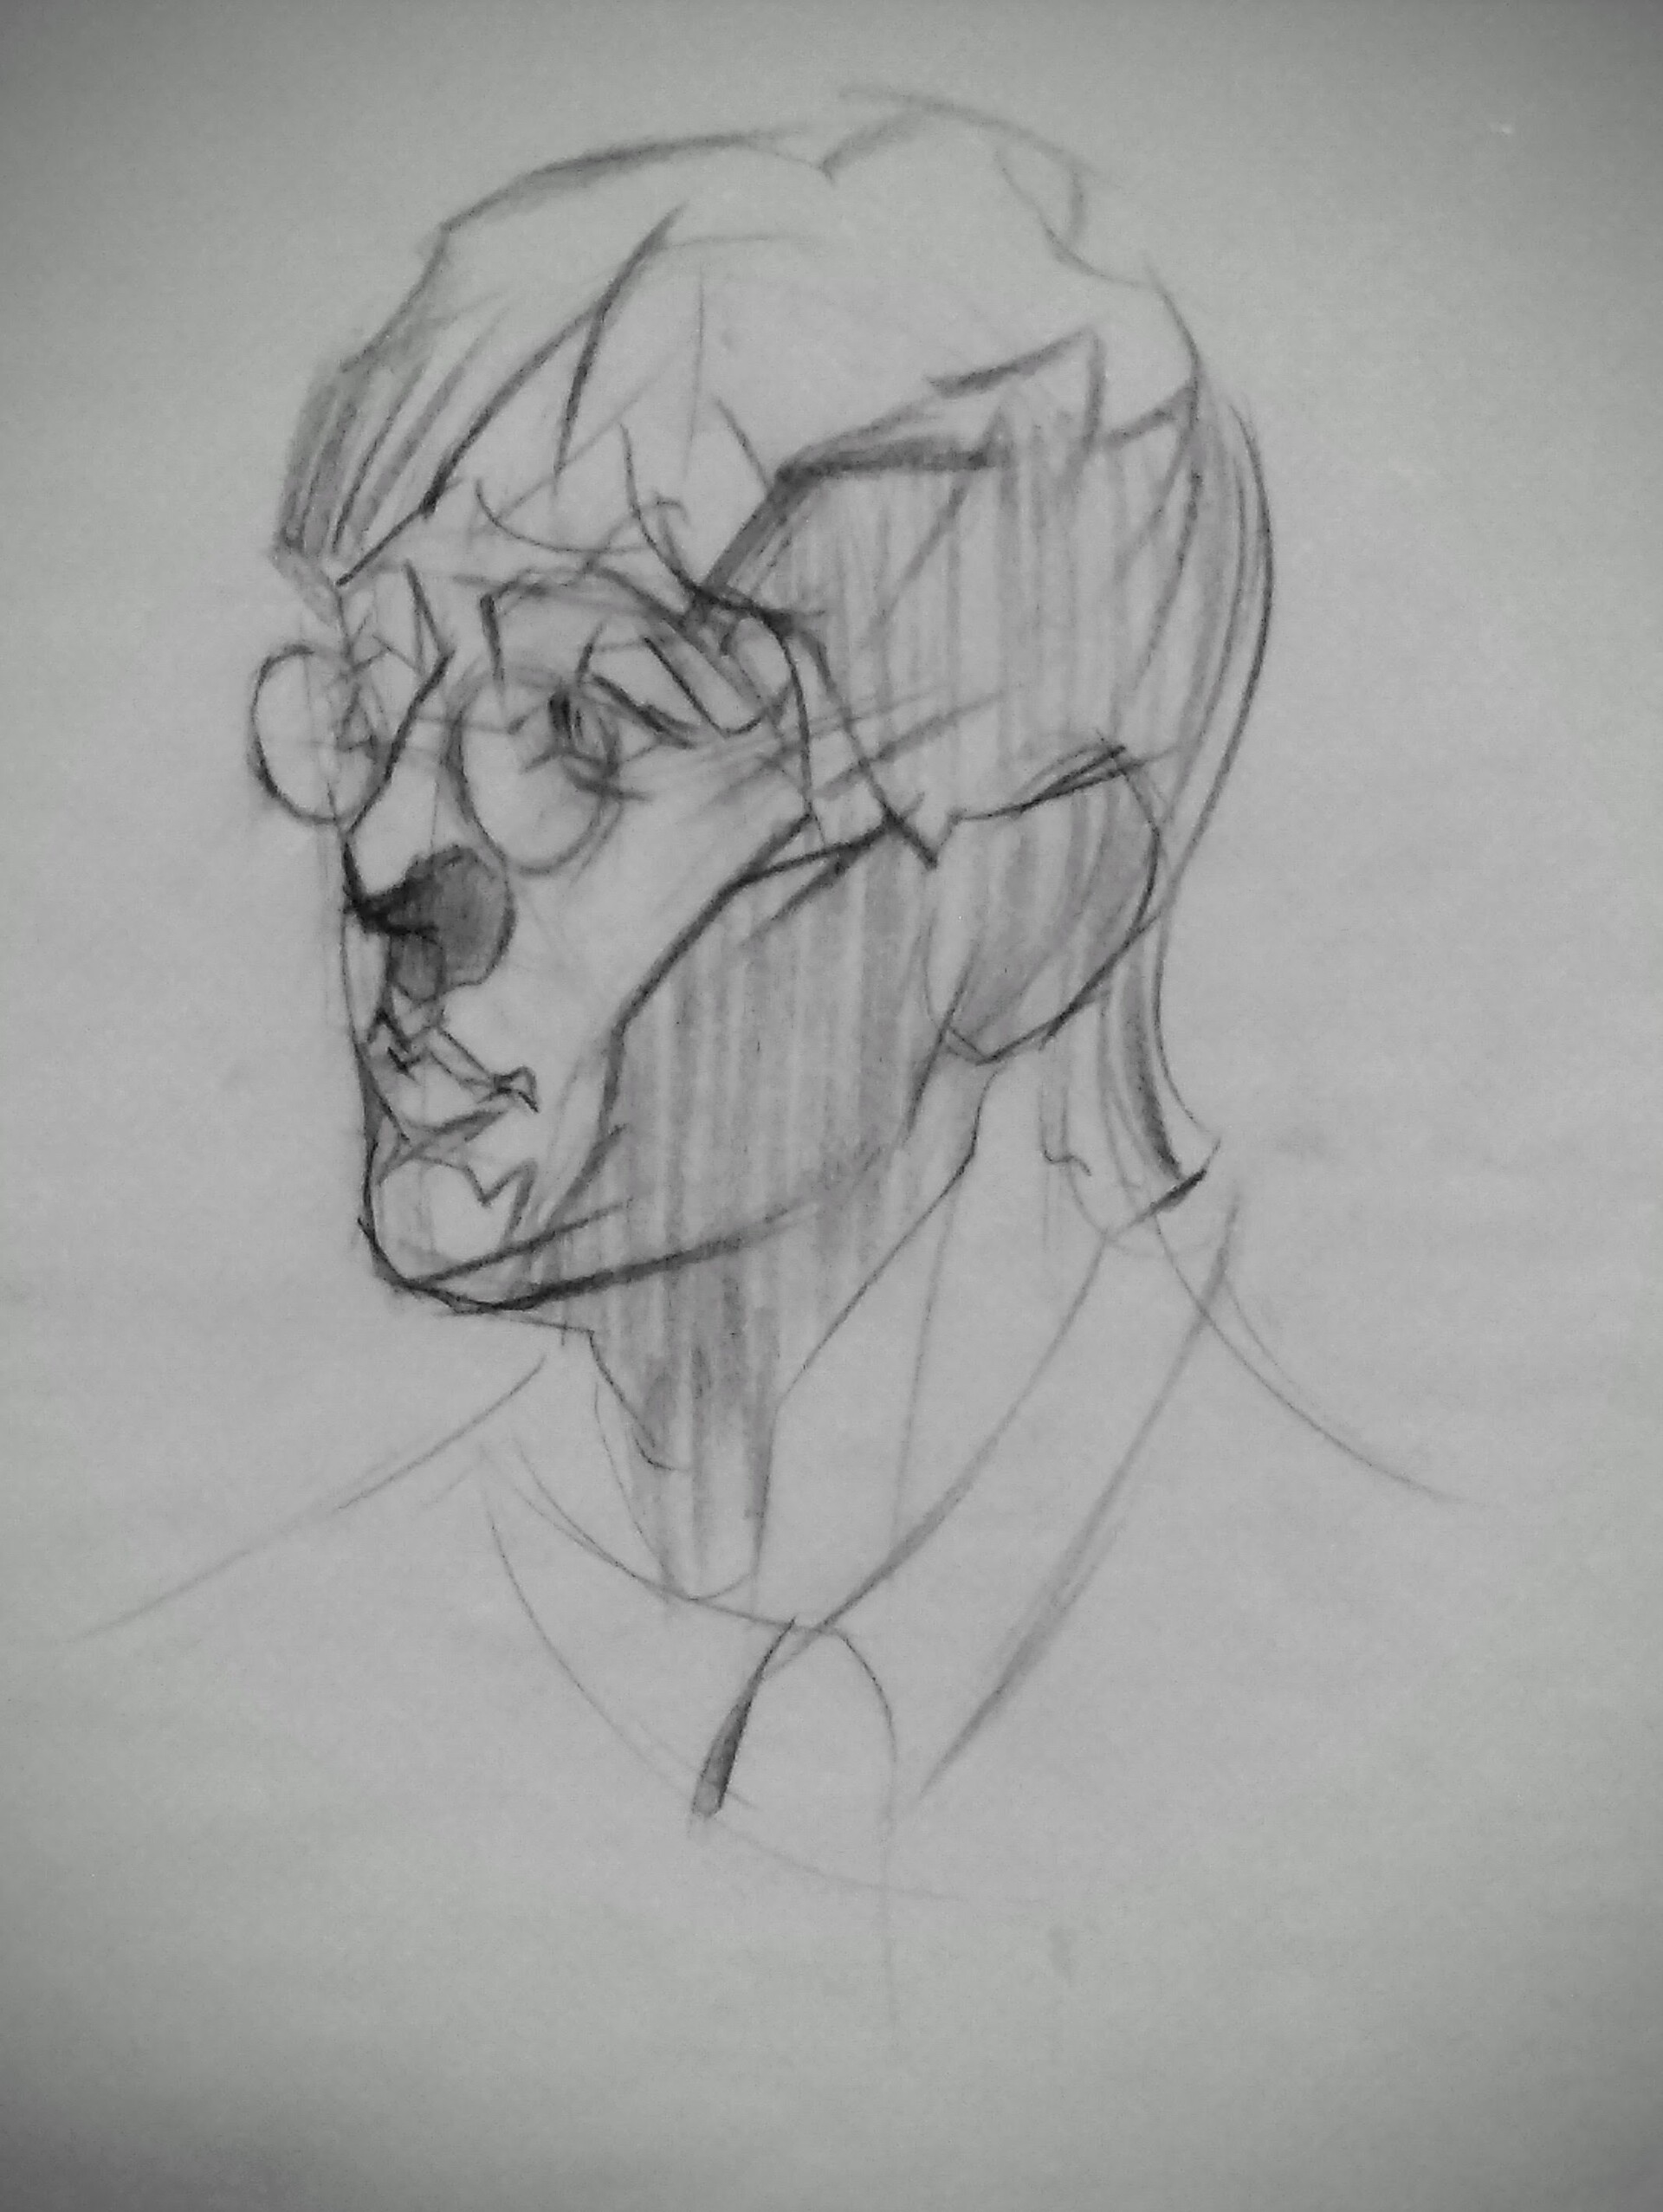 ArtStation - Head Studies - Charcoal Sketch